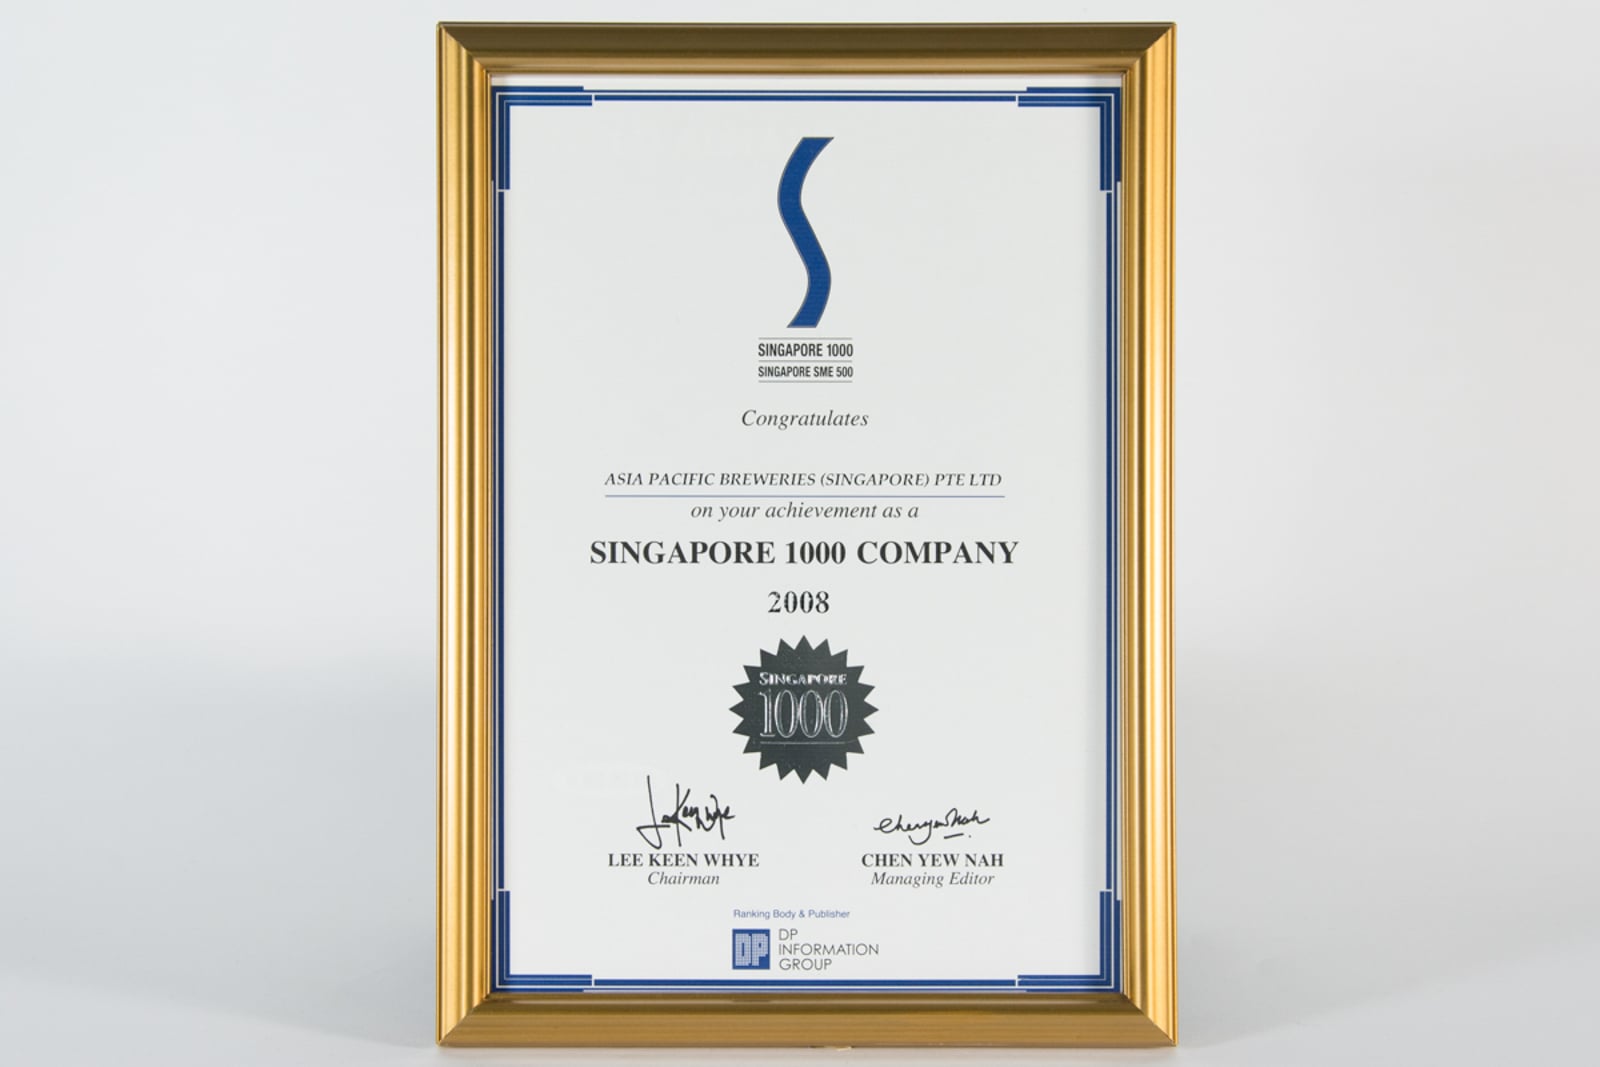 APBS Pte Ltd Singapore 1000 Company, DP Information Group Certificate 2008